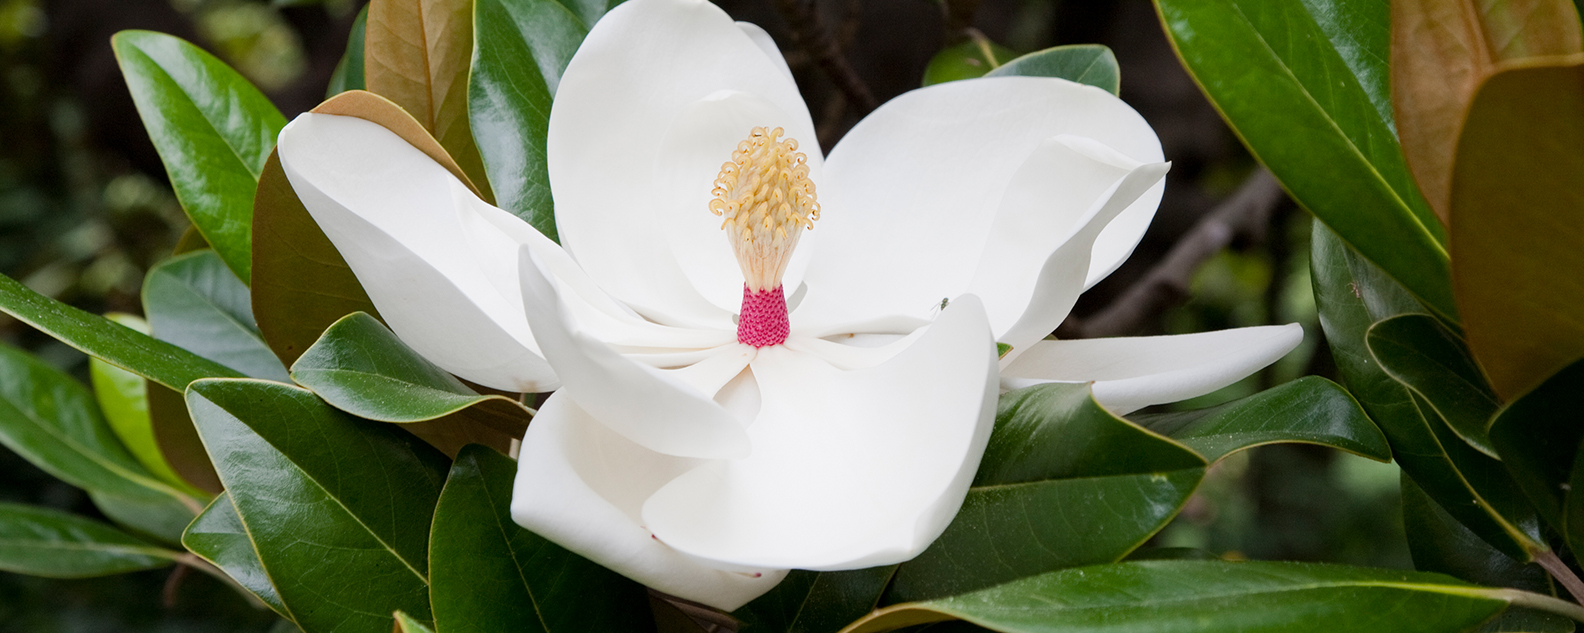 Magnolia grandiflora flower